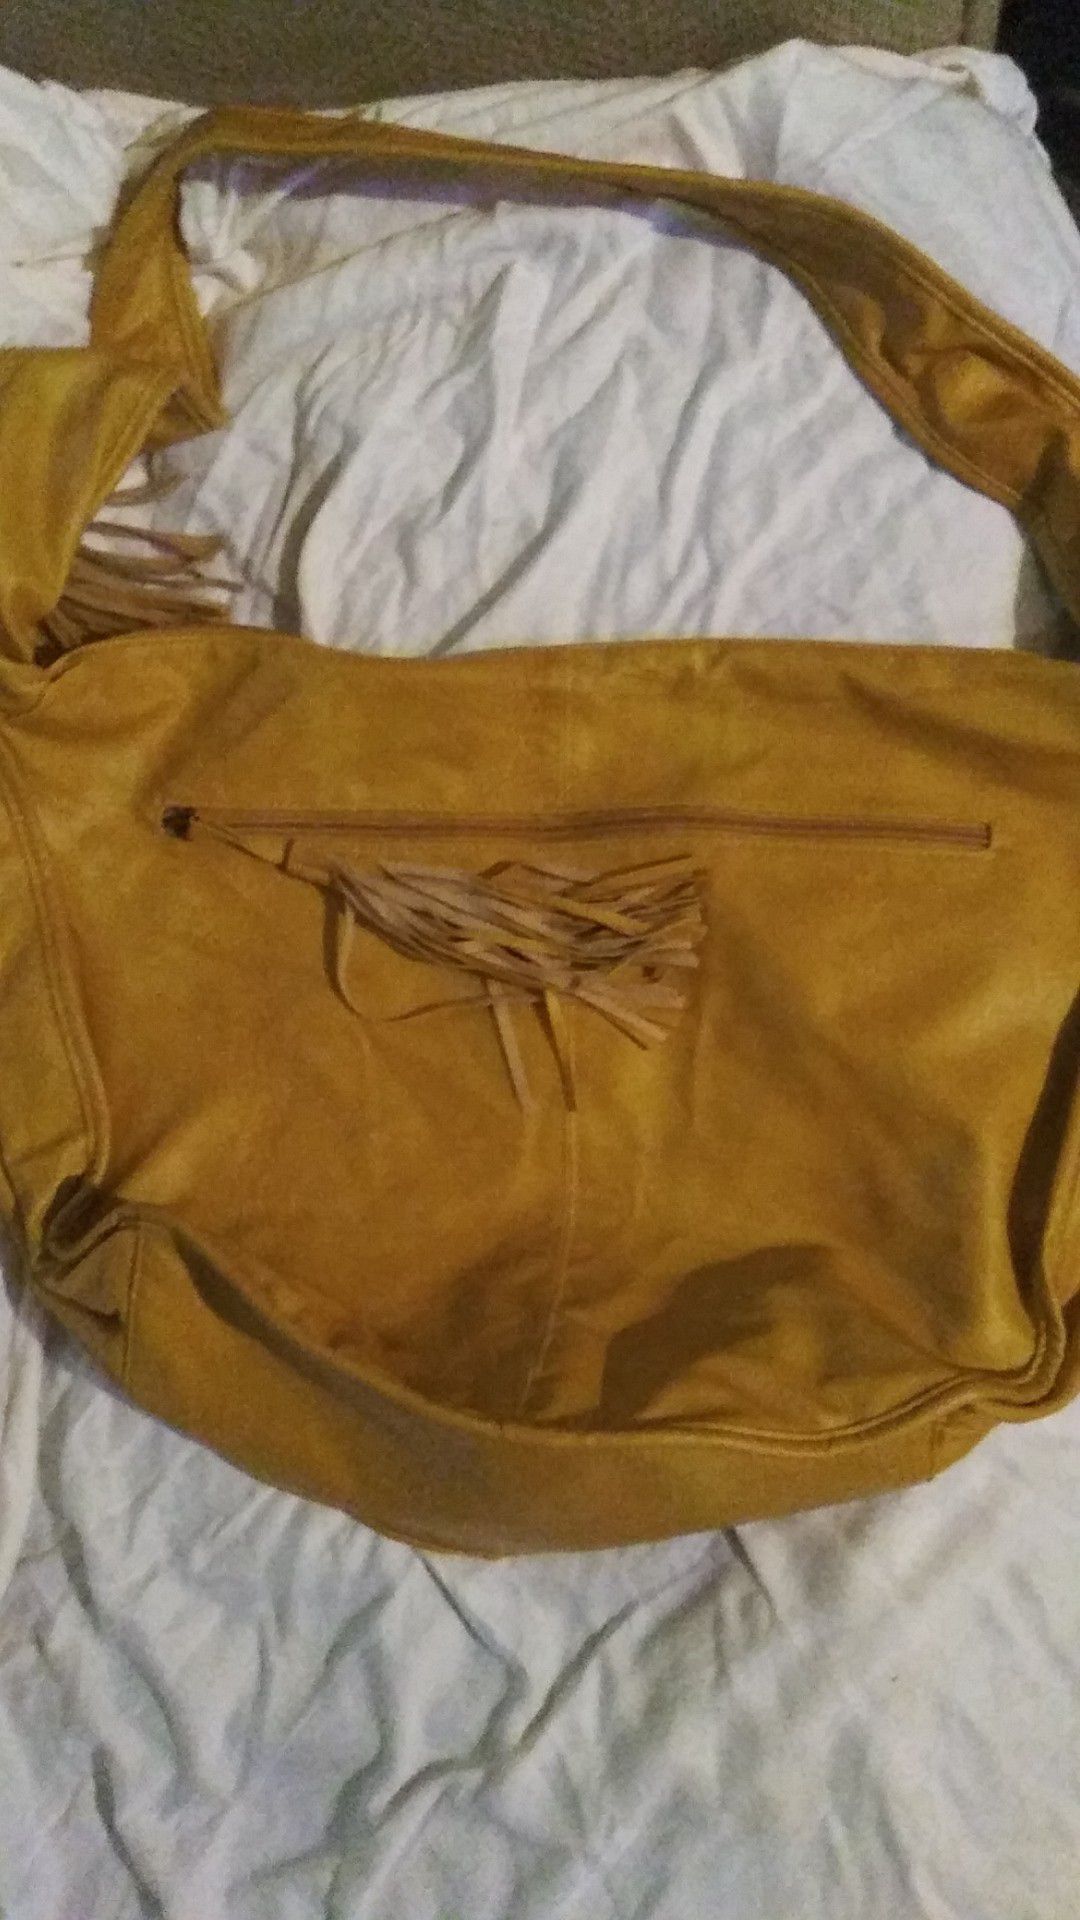 leather hobo bag $10